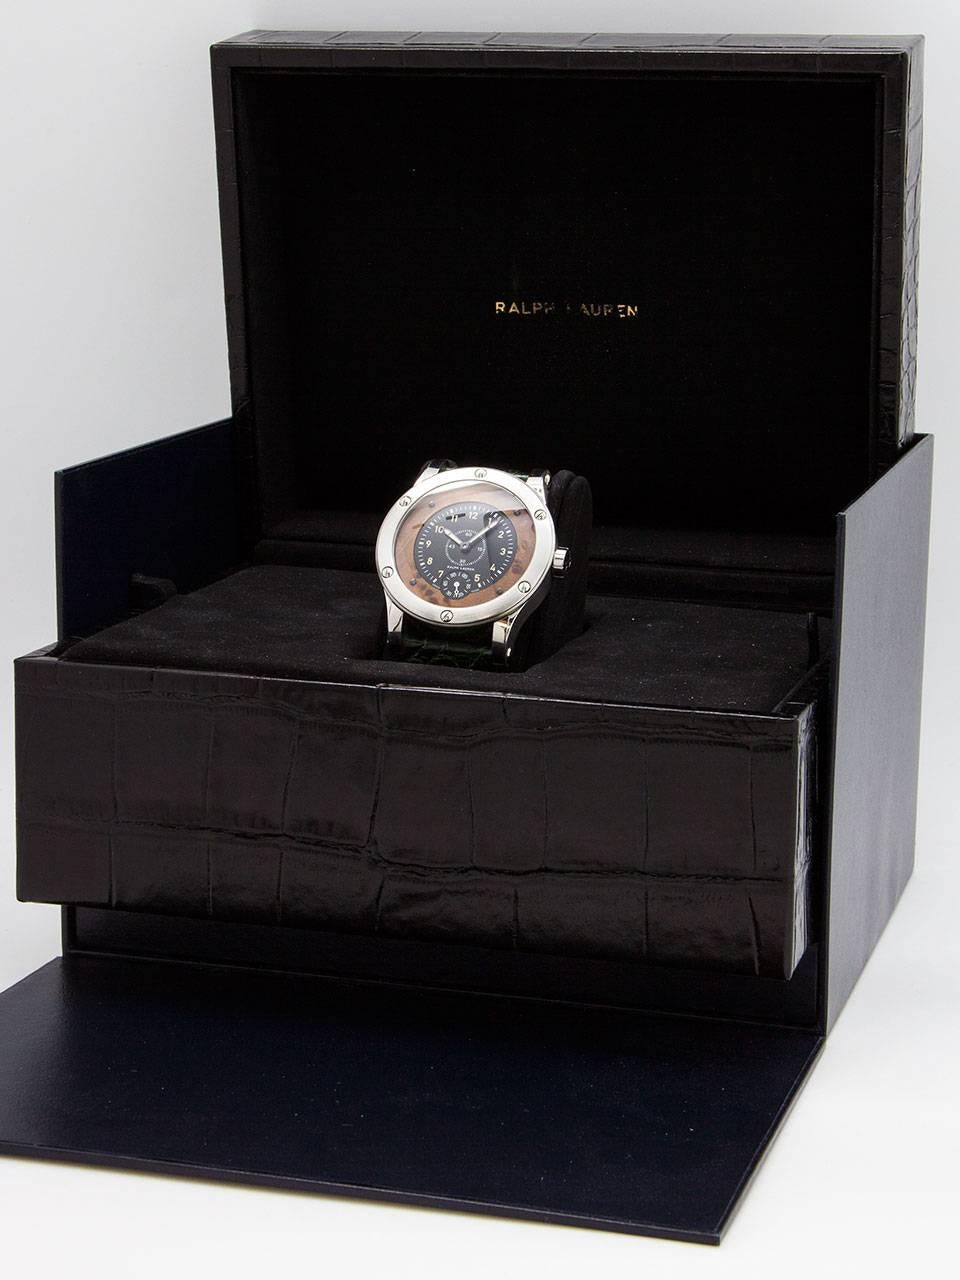 Ralph Lauren Stainless Steel Ltd Ed Sporting Automotive Manual Wristwatch, c2012 For Sale 1